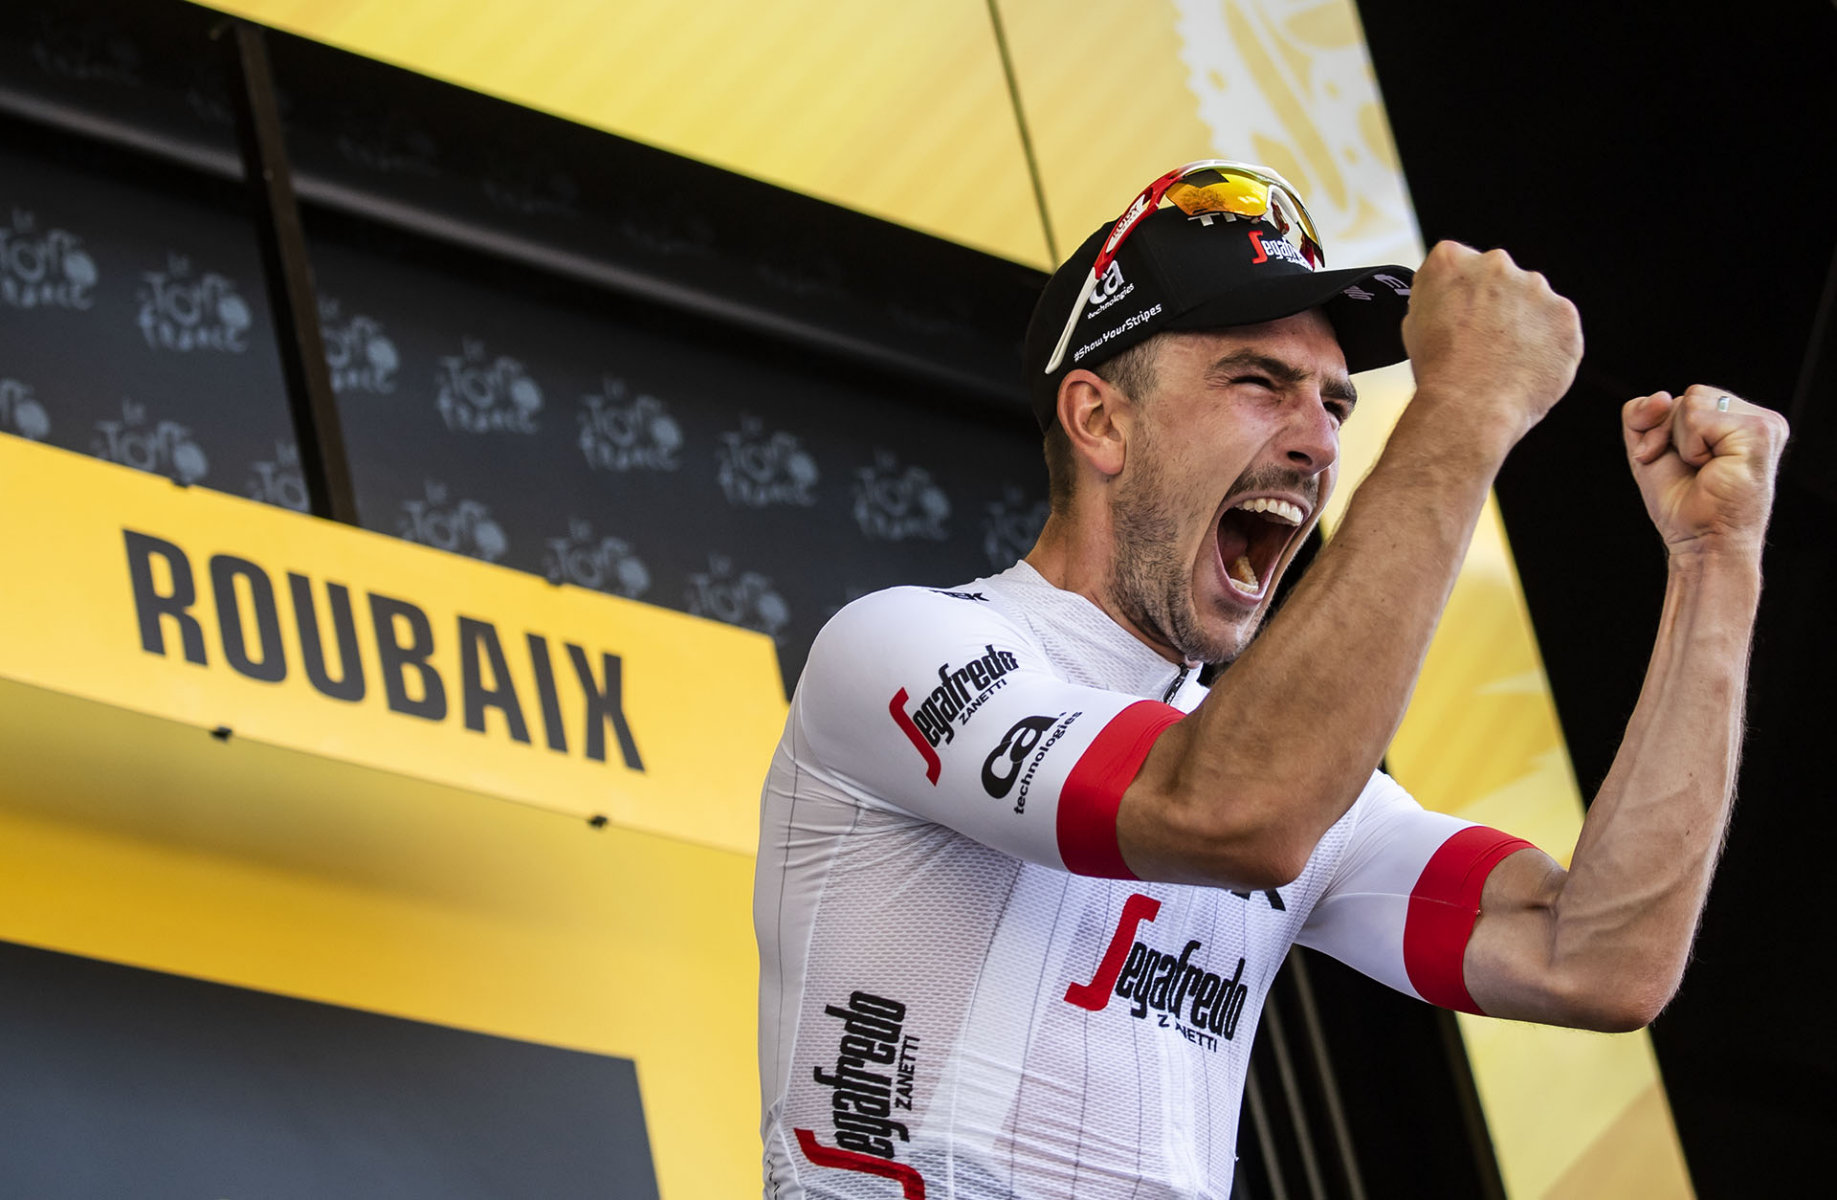 Tour de France 2018 - Stage Nine - John Degenkolb celebrates winning the stage